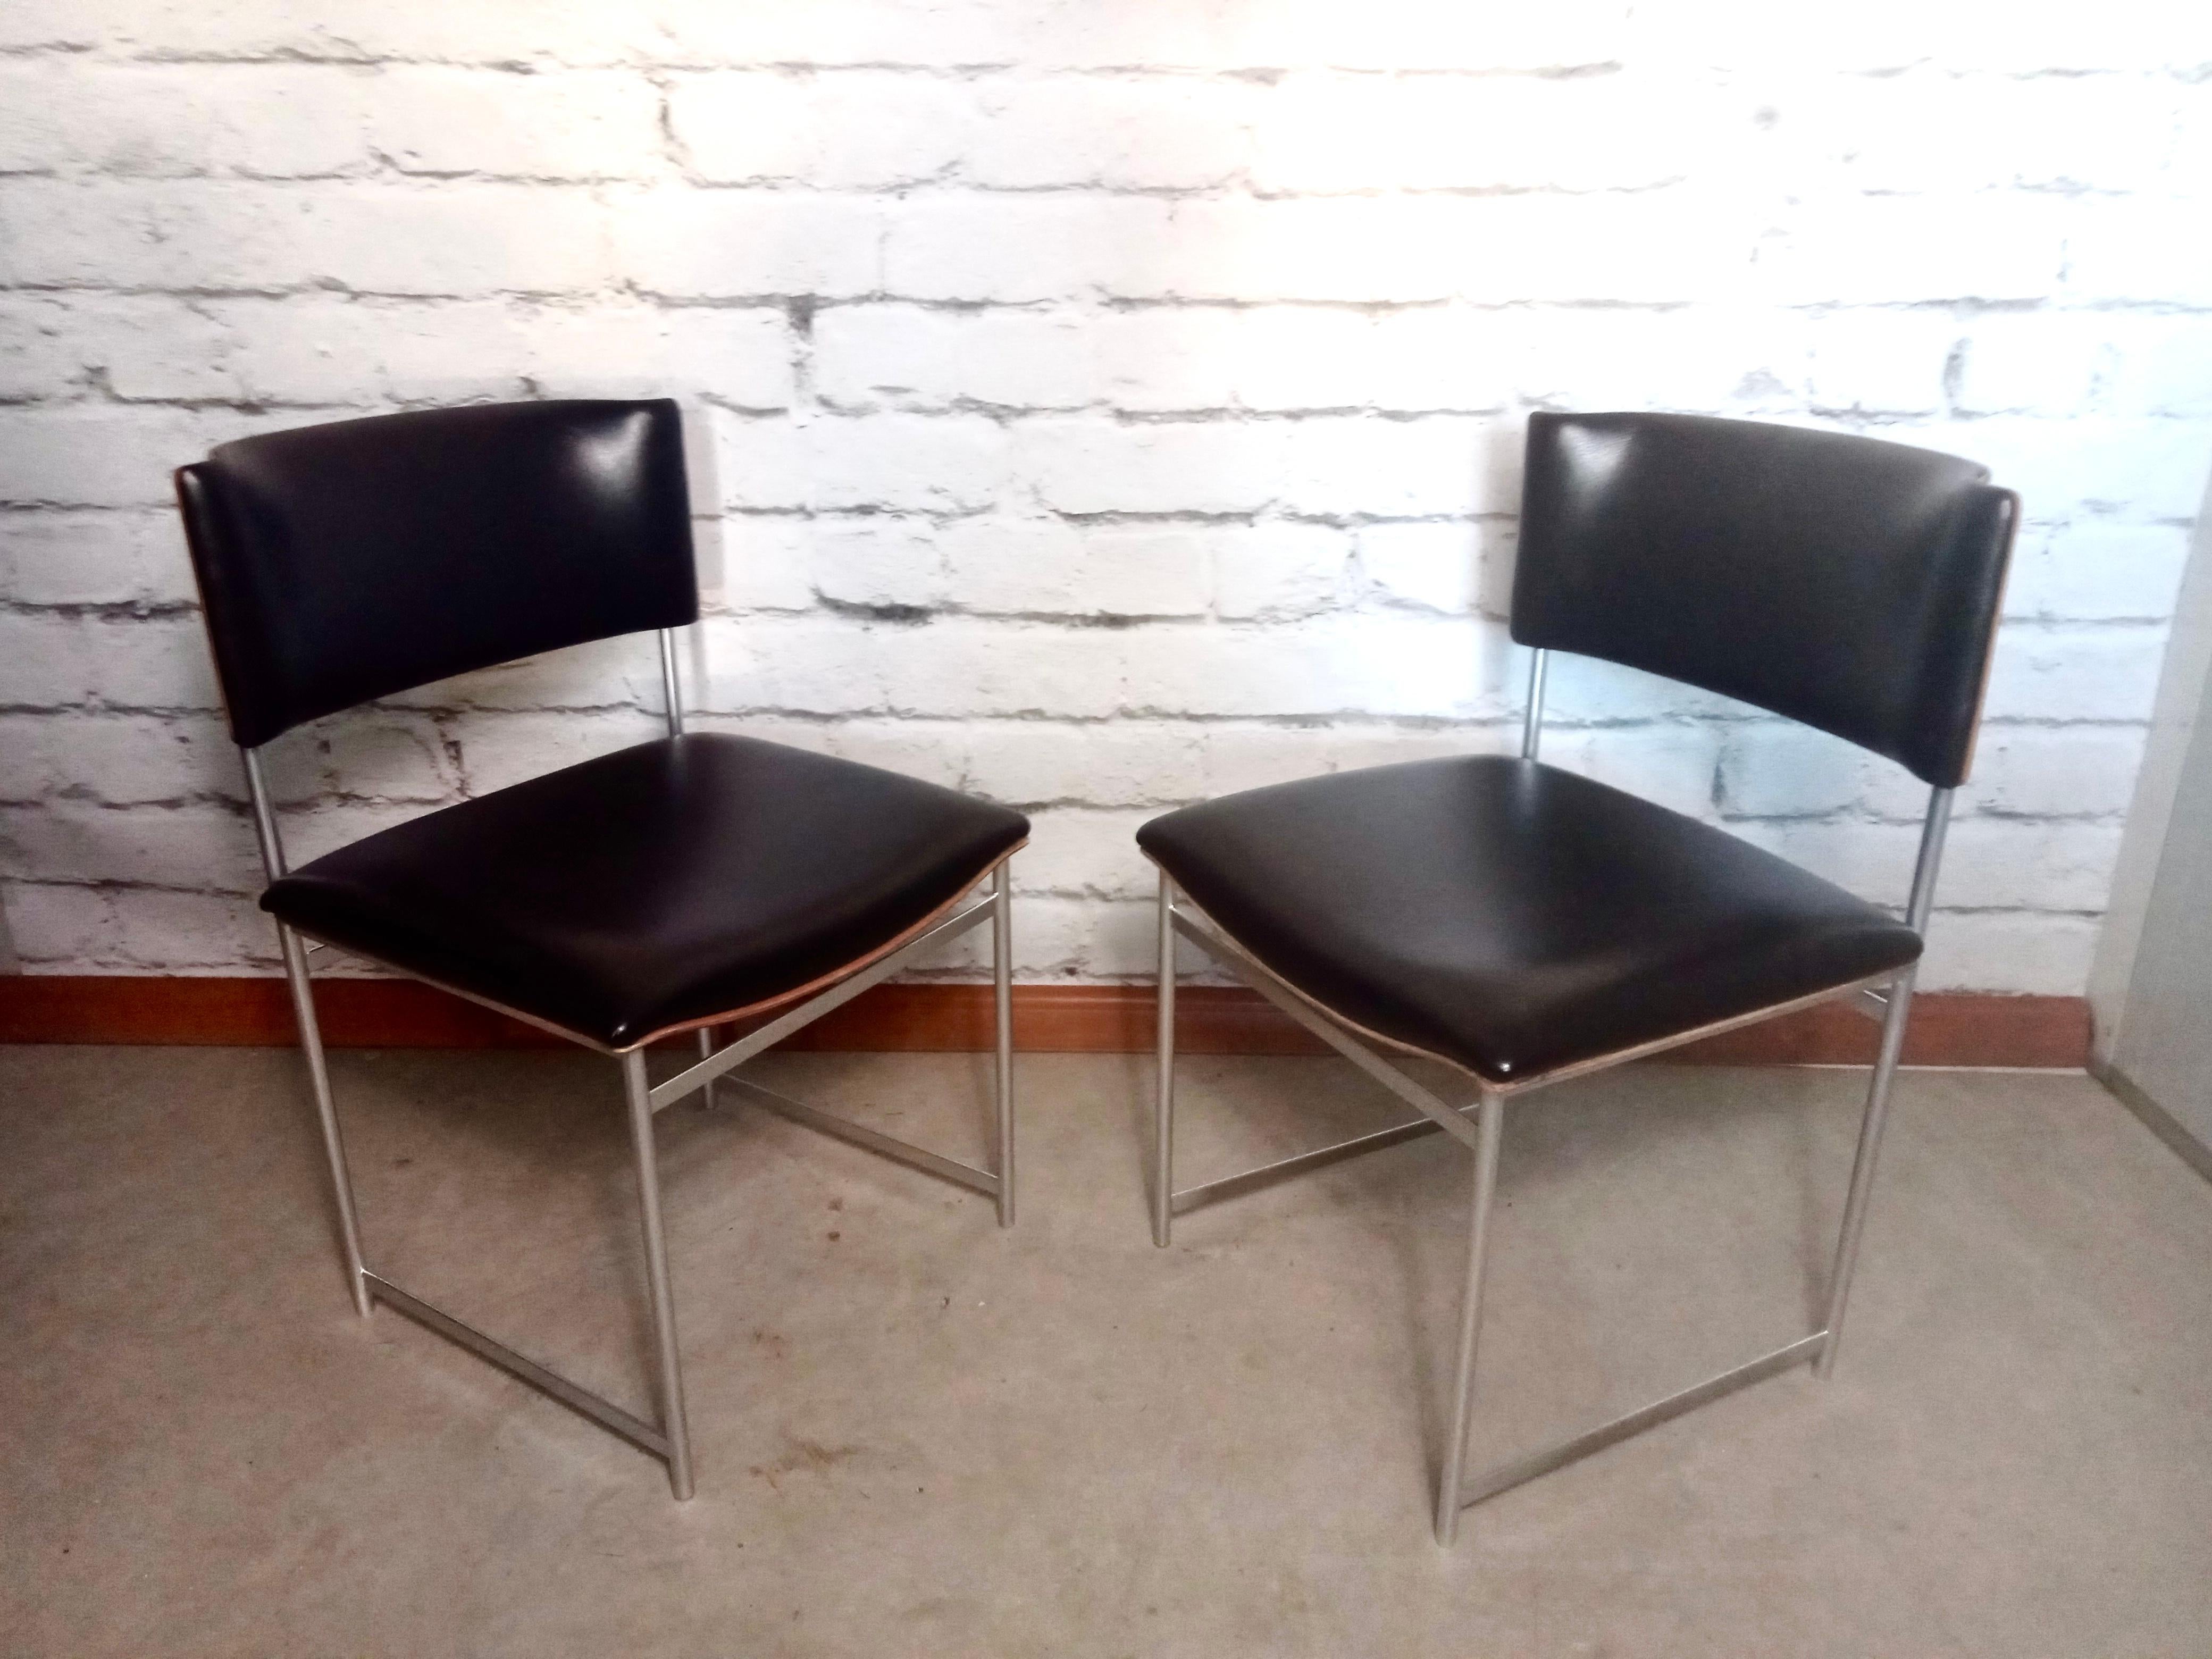 Steel Sm08 Pastoe Chairs by Cees Braakman, 1950’s